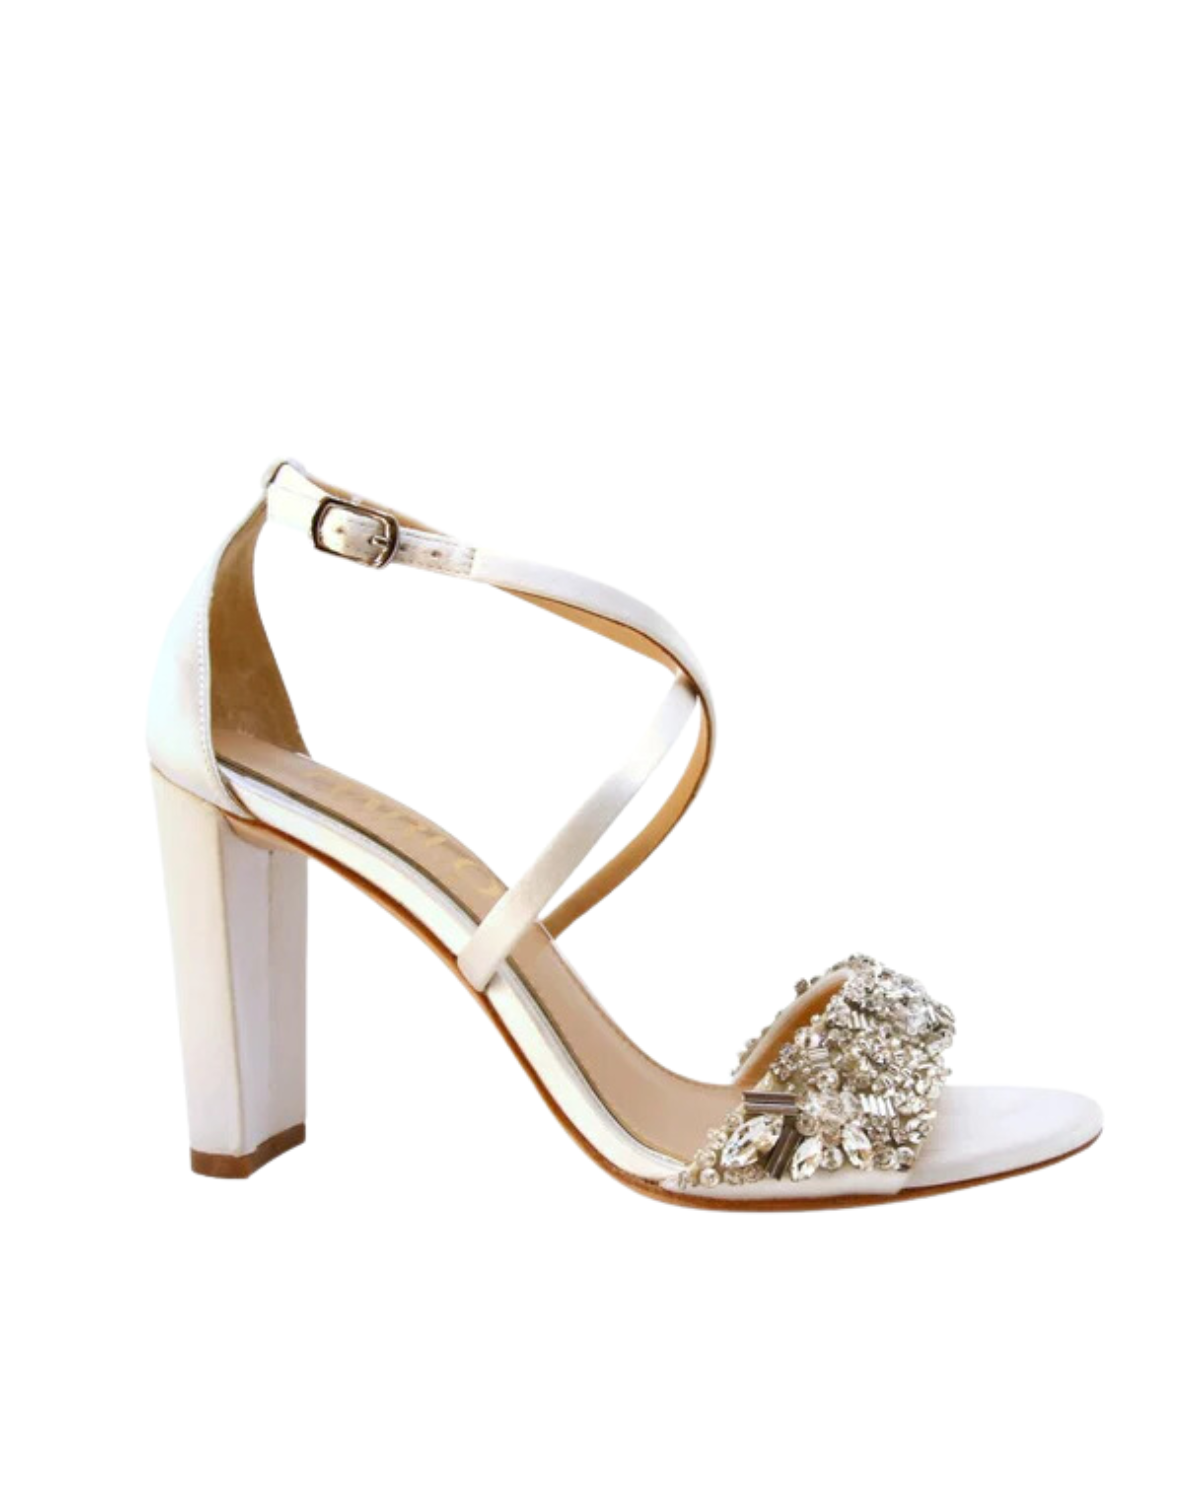 Audrey - White Crystal Embellished Bridal Block Heel - Final size 11